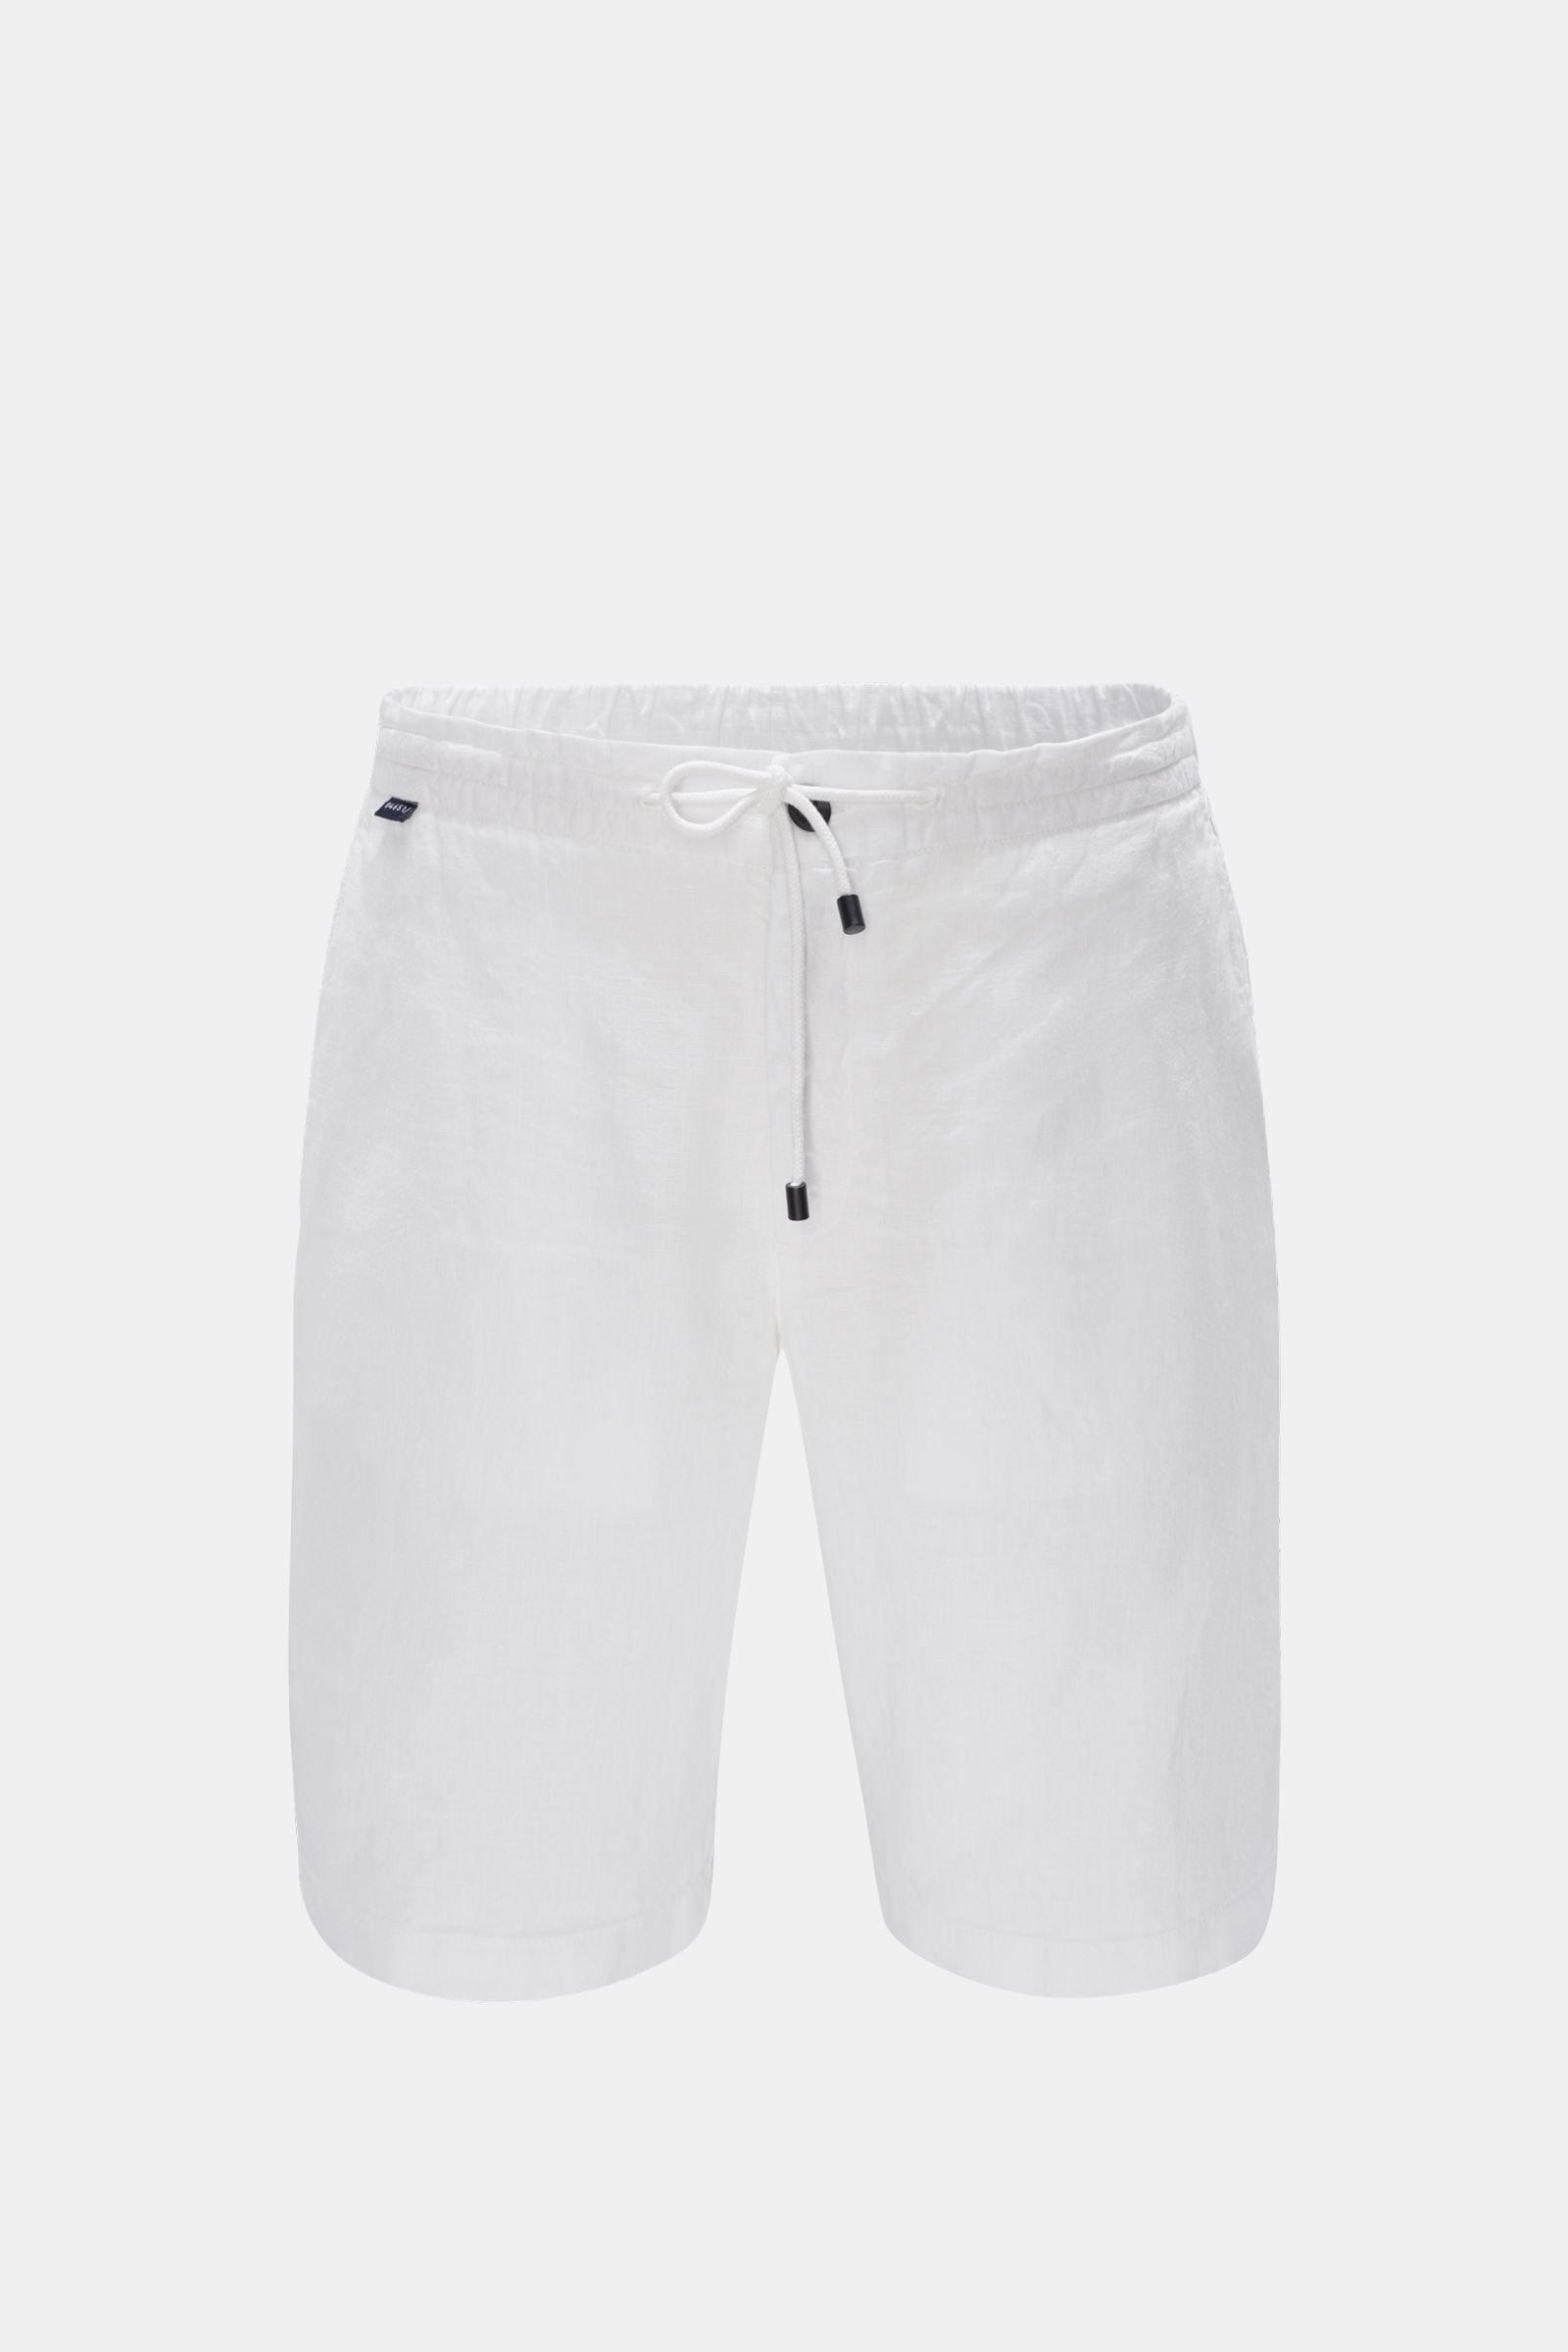 Linen Bermuda shorts white